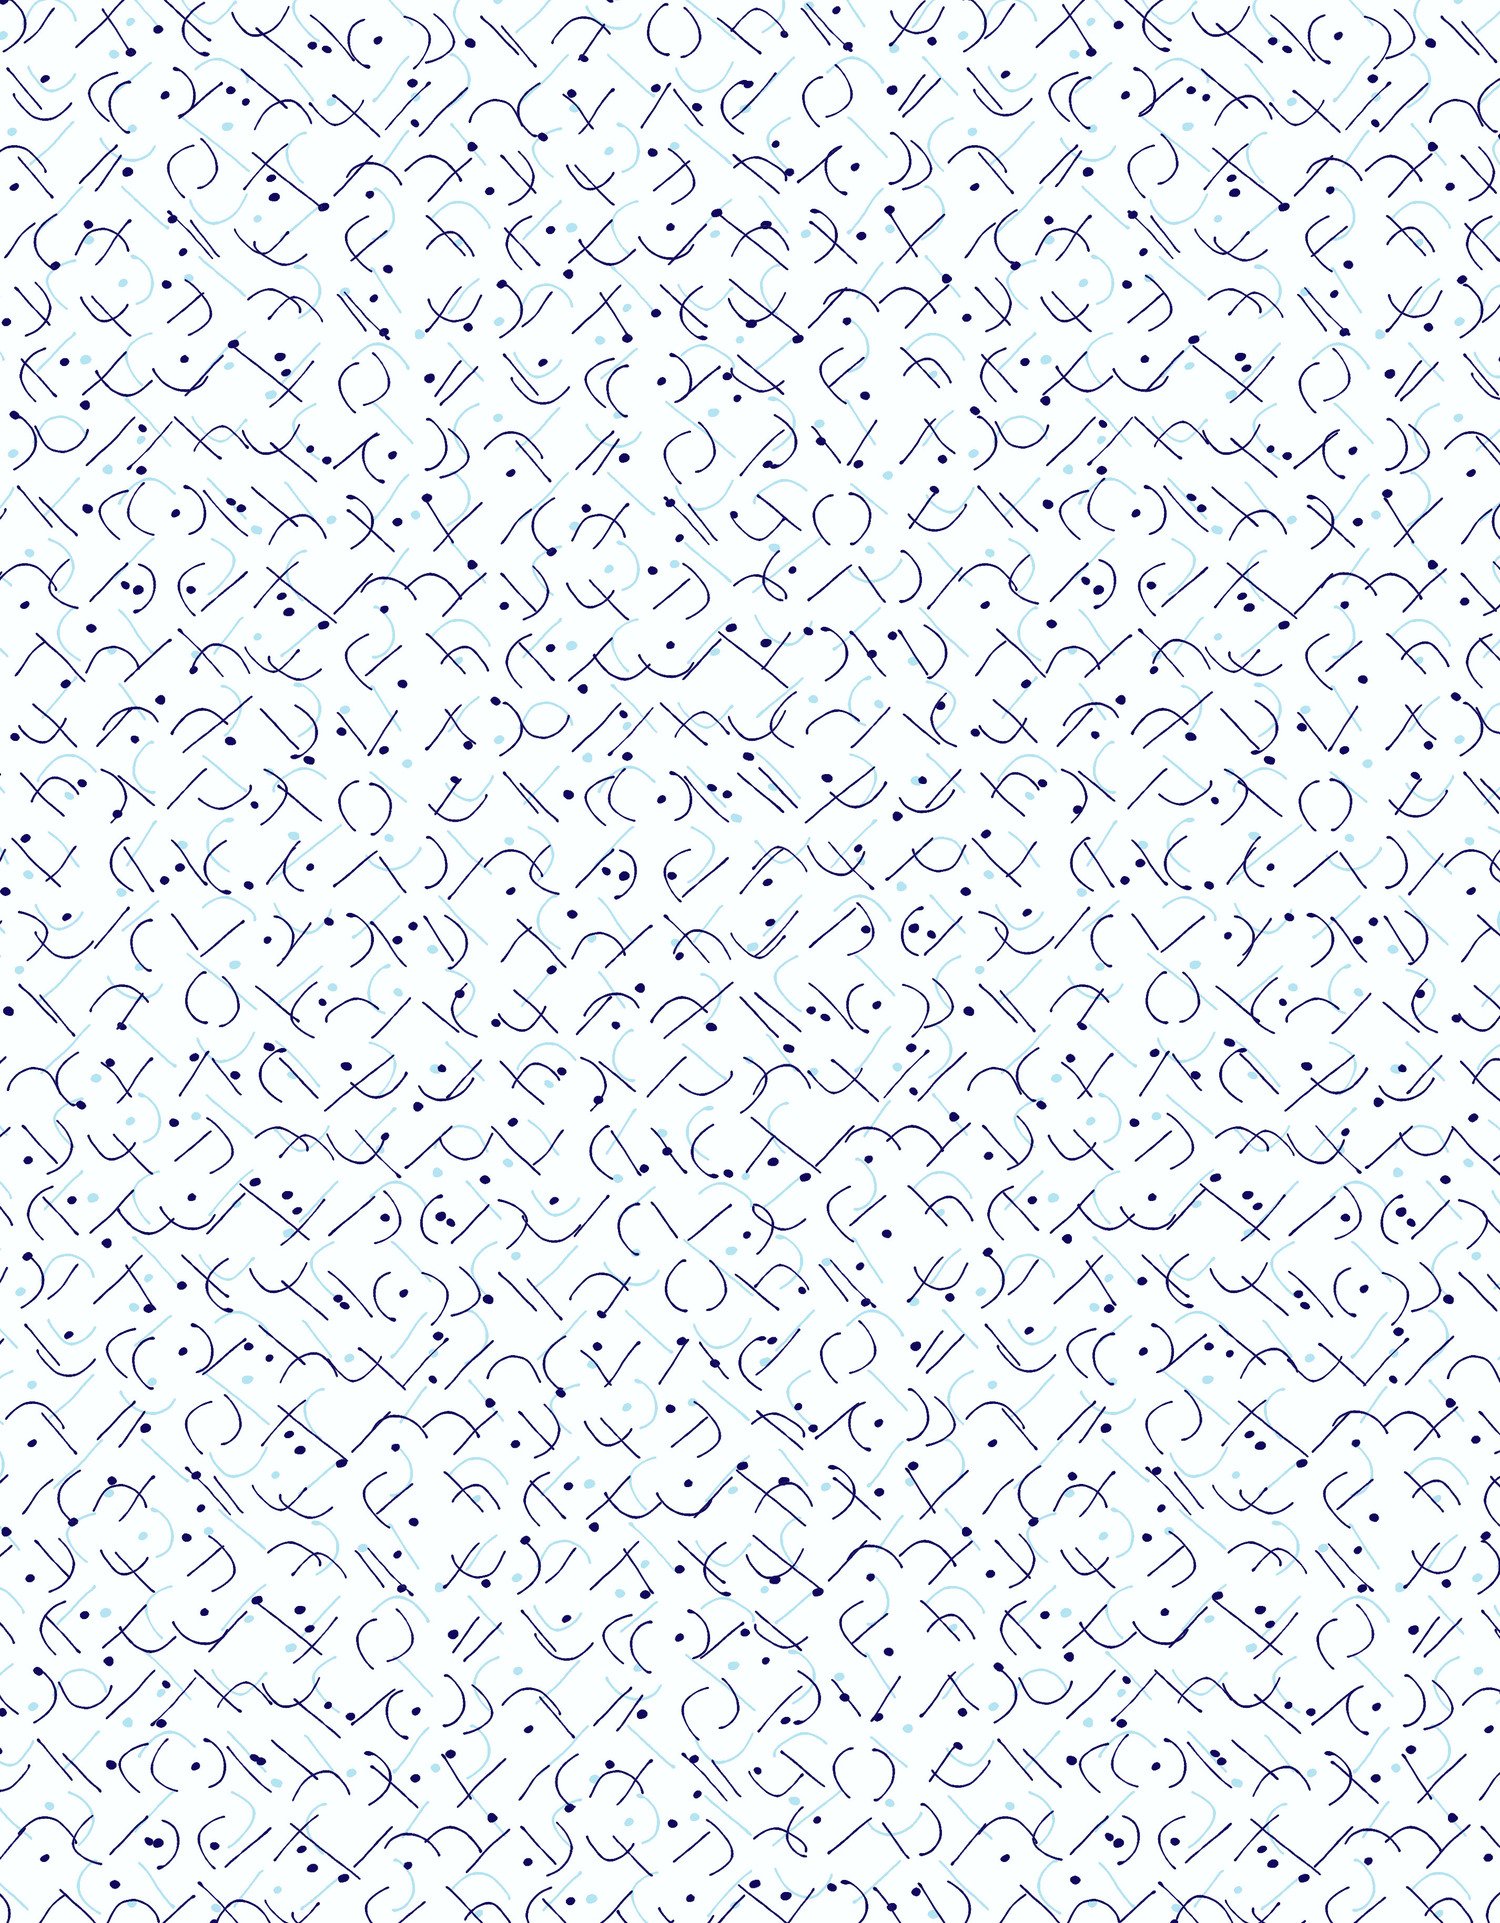 geo+lines+dots-1.jpg